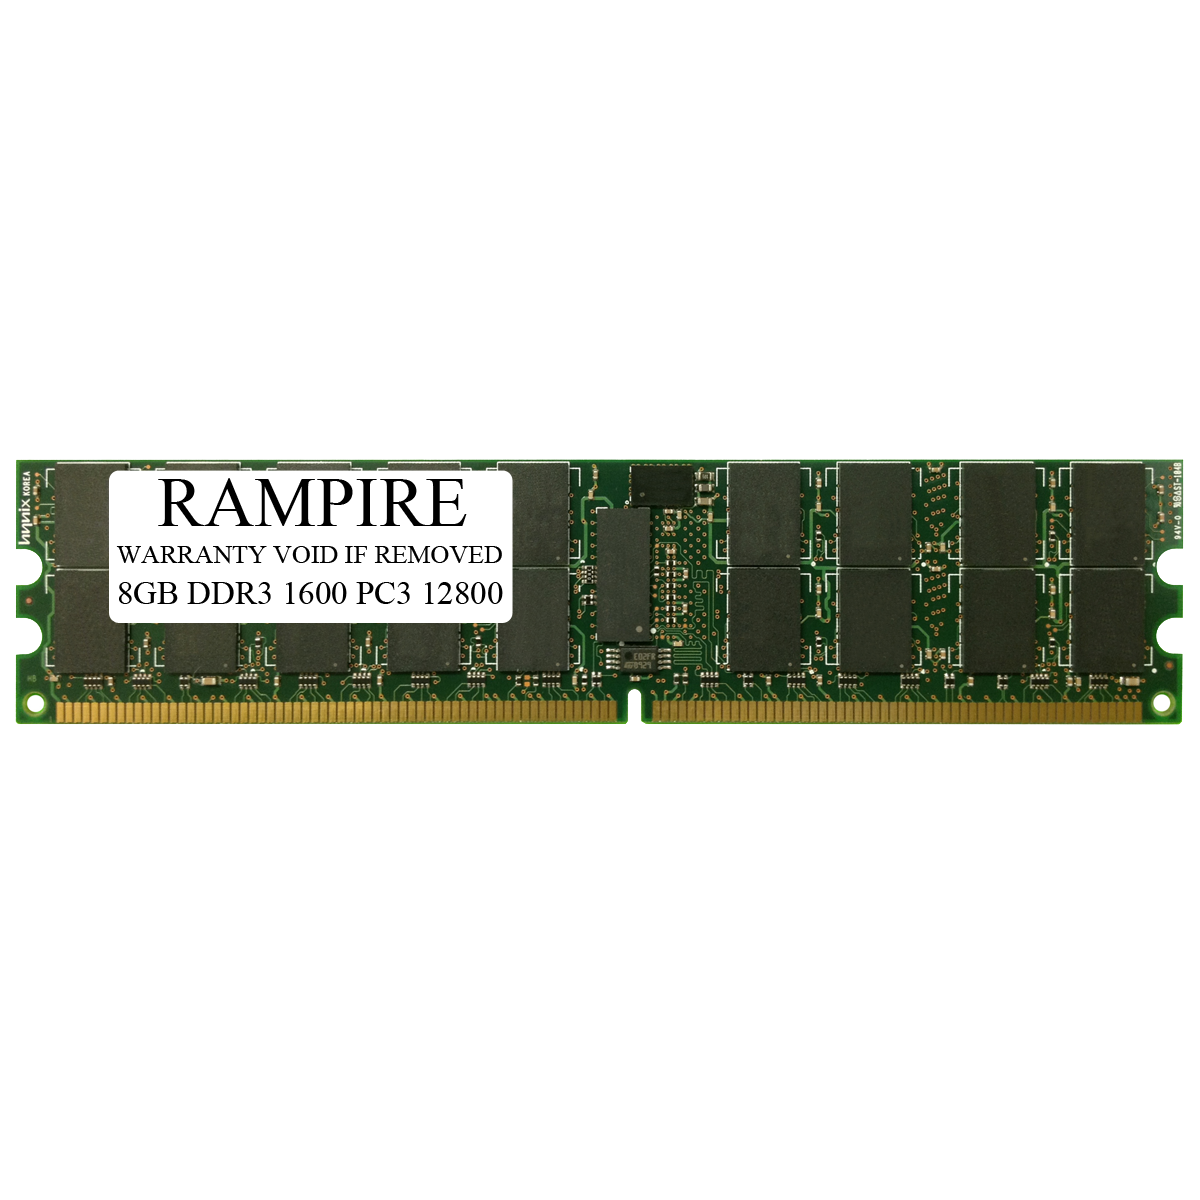 RAMPIRE 8GB DDR3 1600 (PC3 12800) 240-Pin SDRAM 1Rx4 Standard Profile 1.5V ECC Registered Server Memory